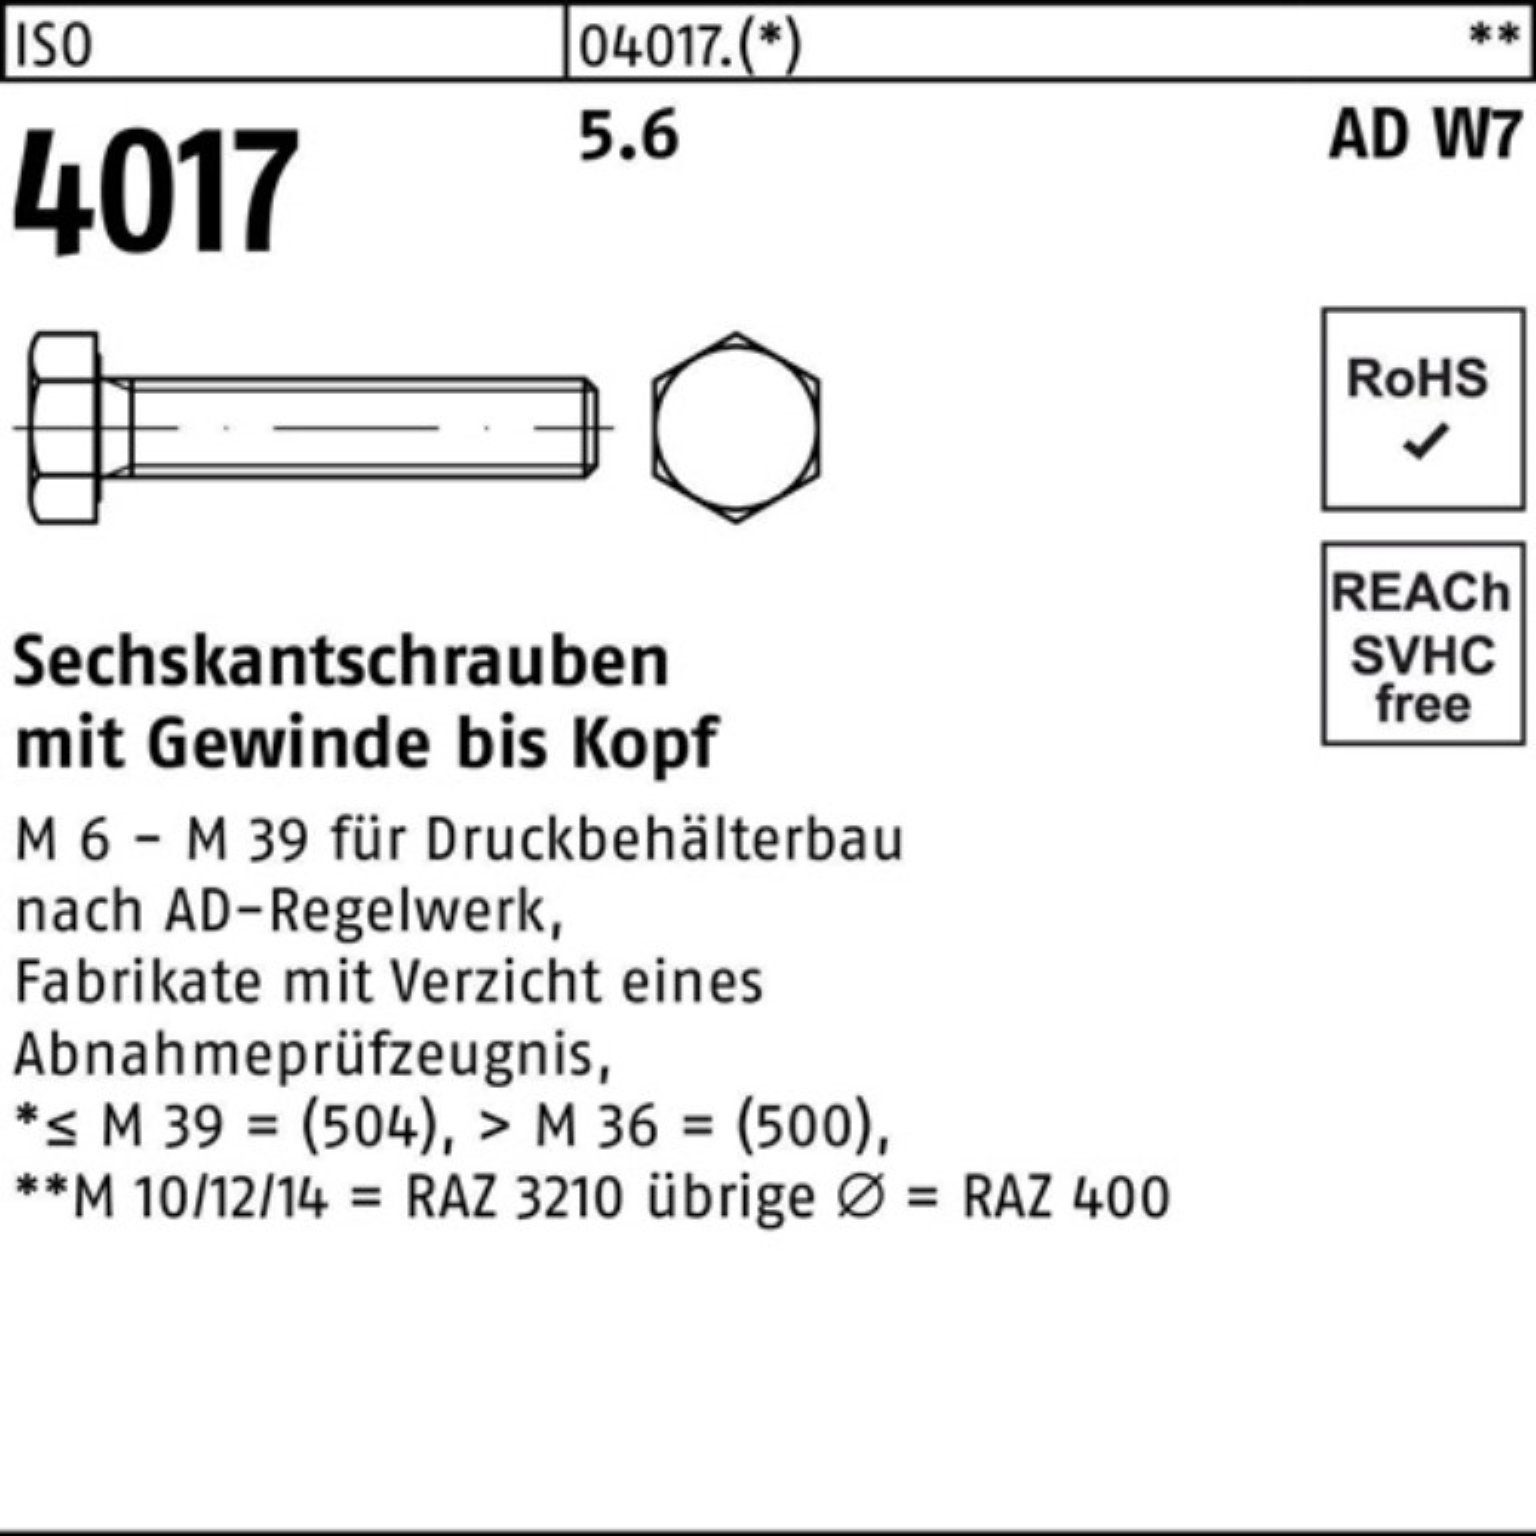 16 W7 M10x 4017 200 Pack Bufab VG 5.6 Stück ISO 200er Sechskantschraube AD Sechskantschraube